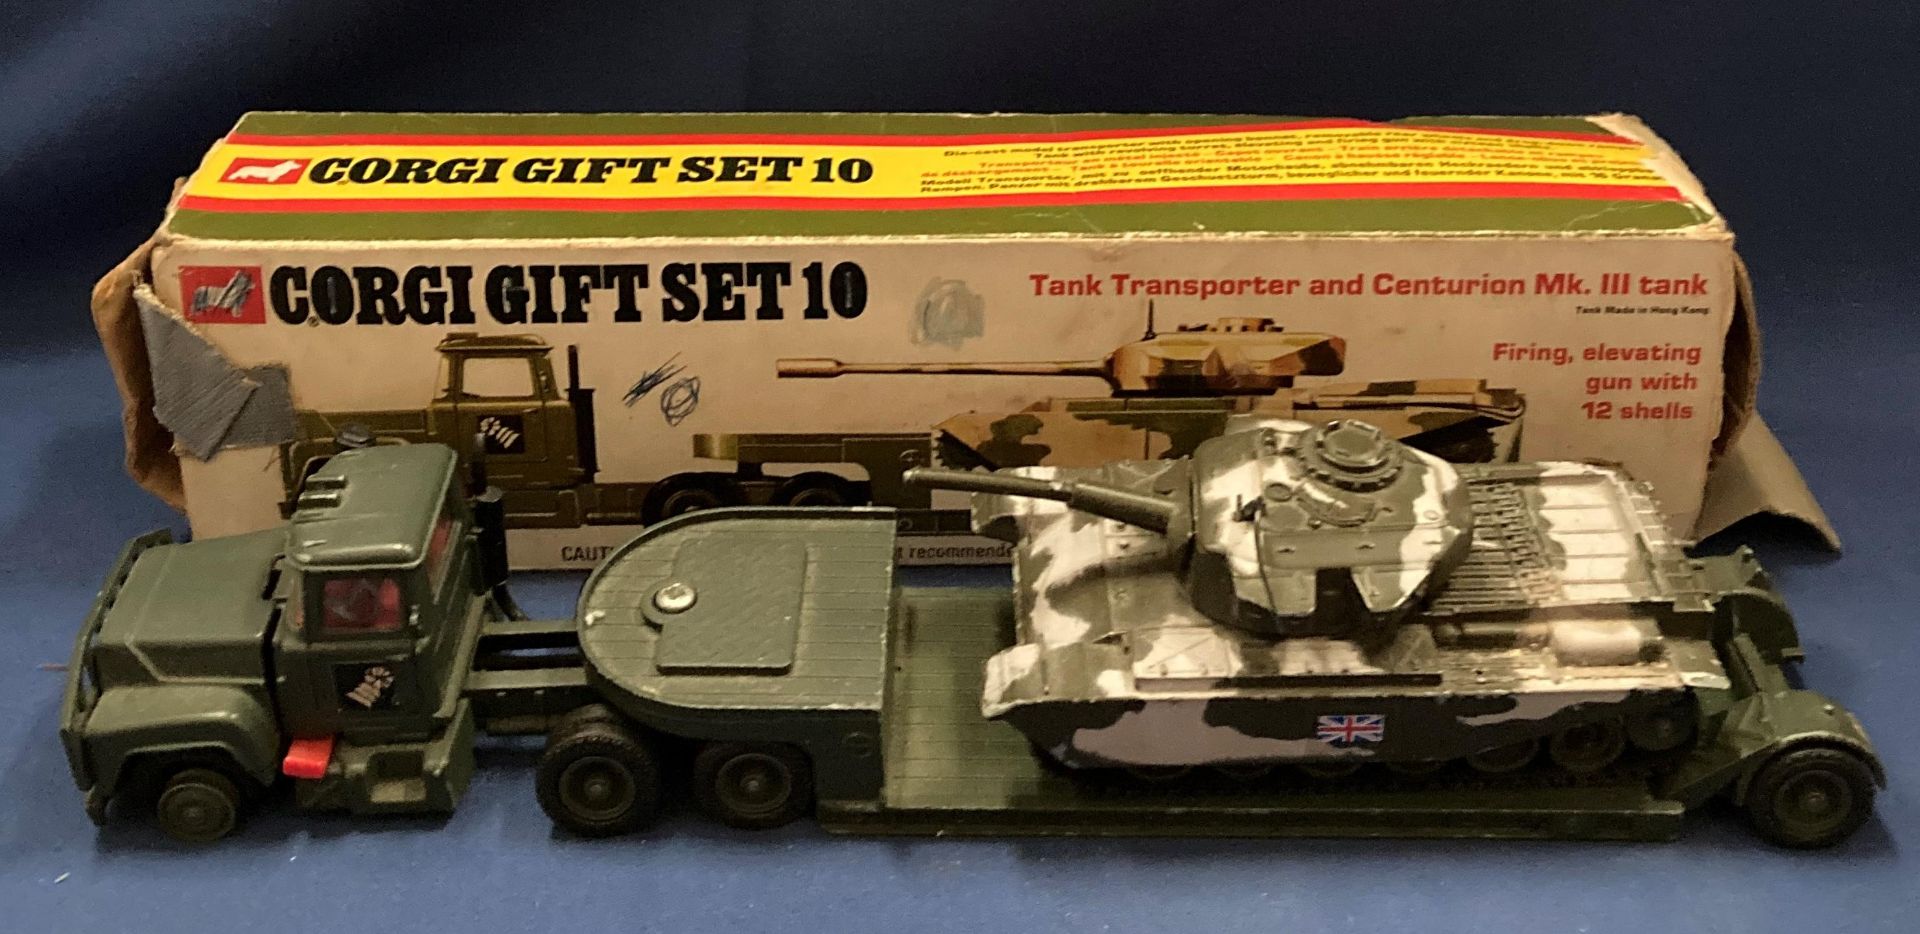 Corgi gift set 10 tank transporter and Centurion MKIII tank in box (box play worn) (S1 glass cab